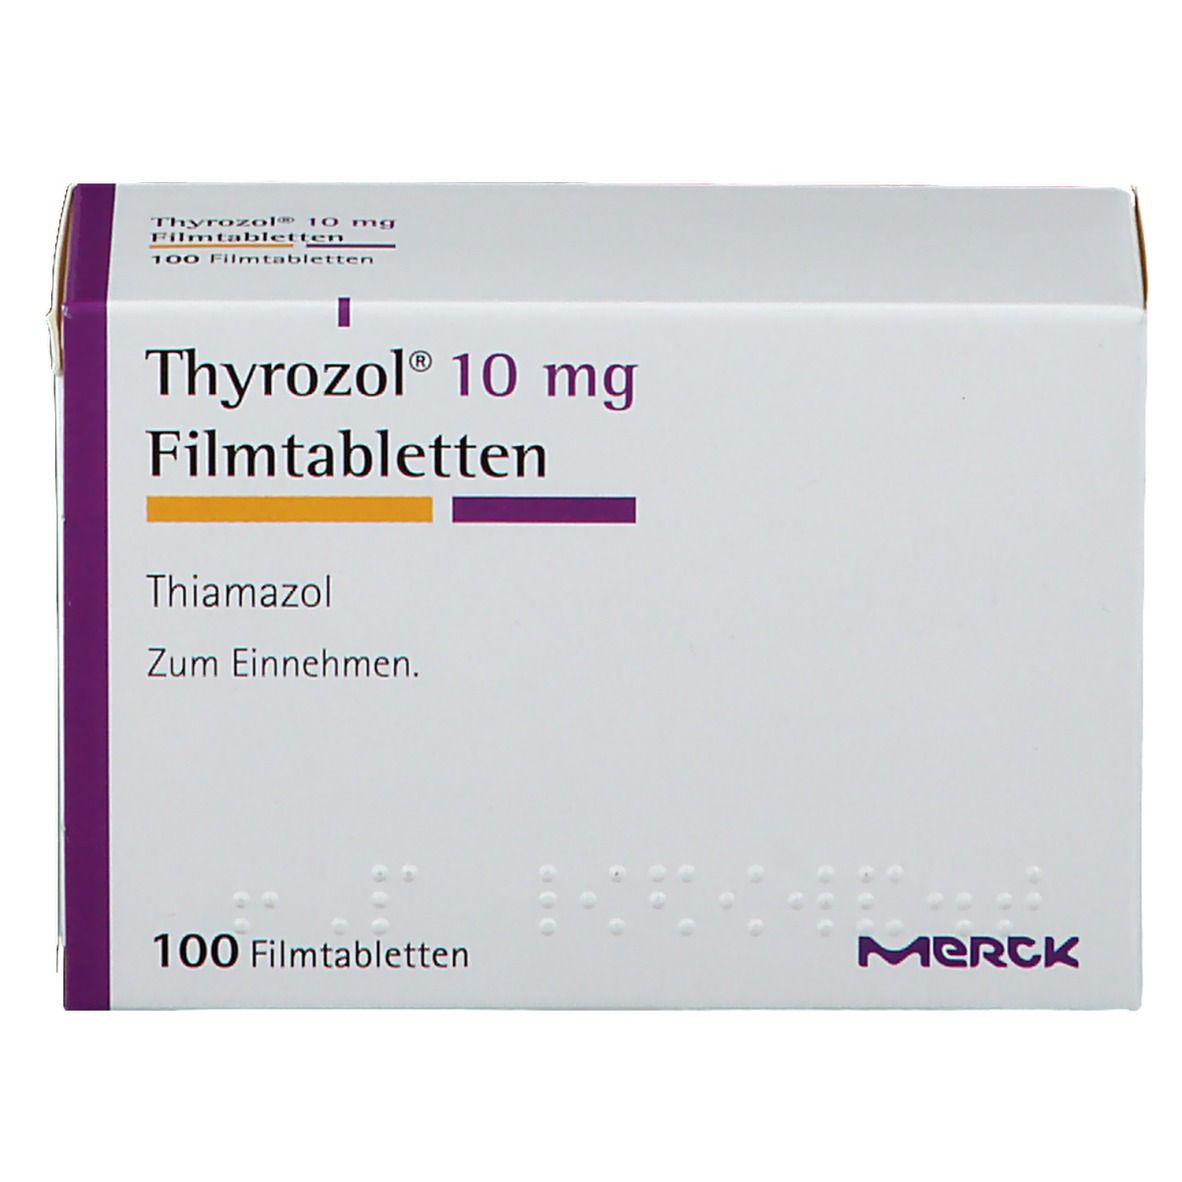 Thyrozol® 10 mg